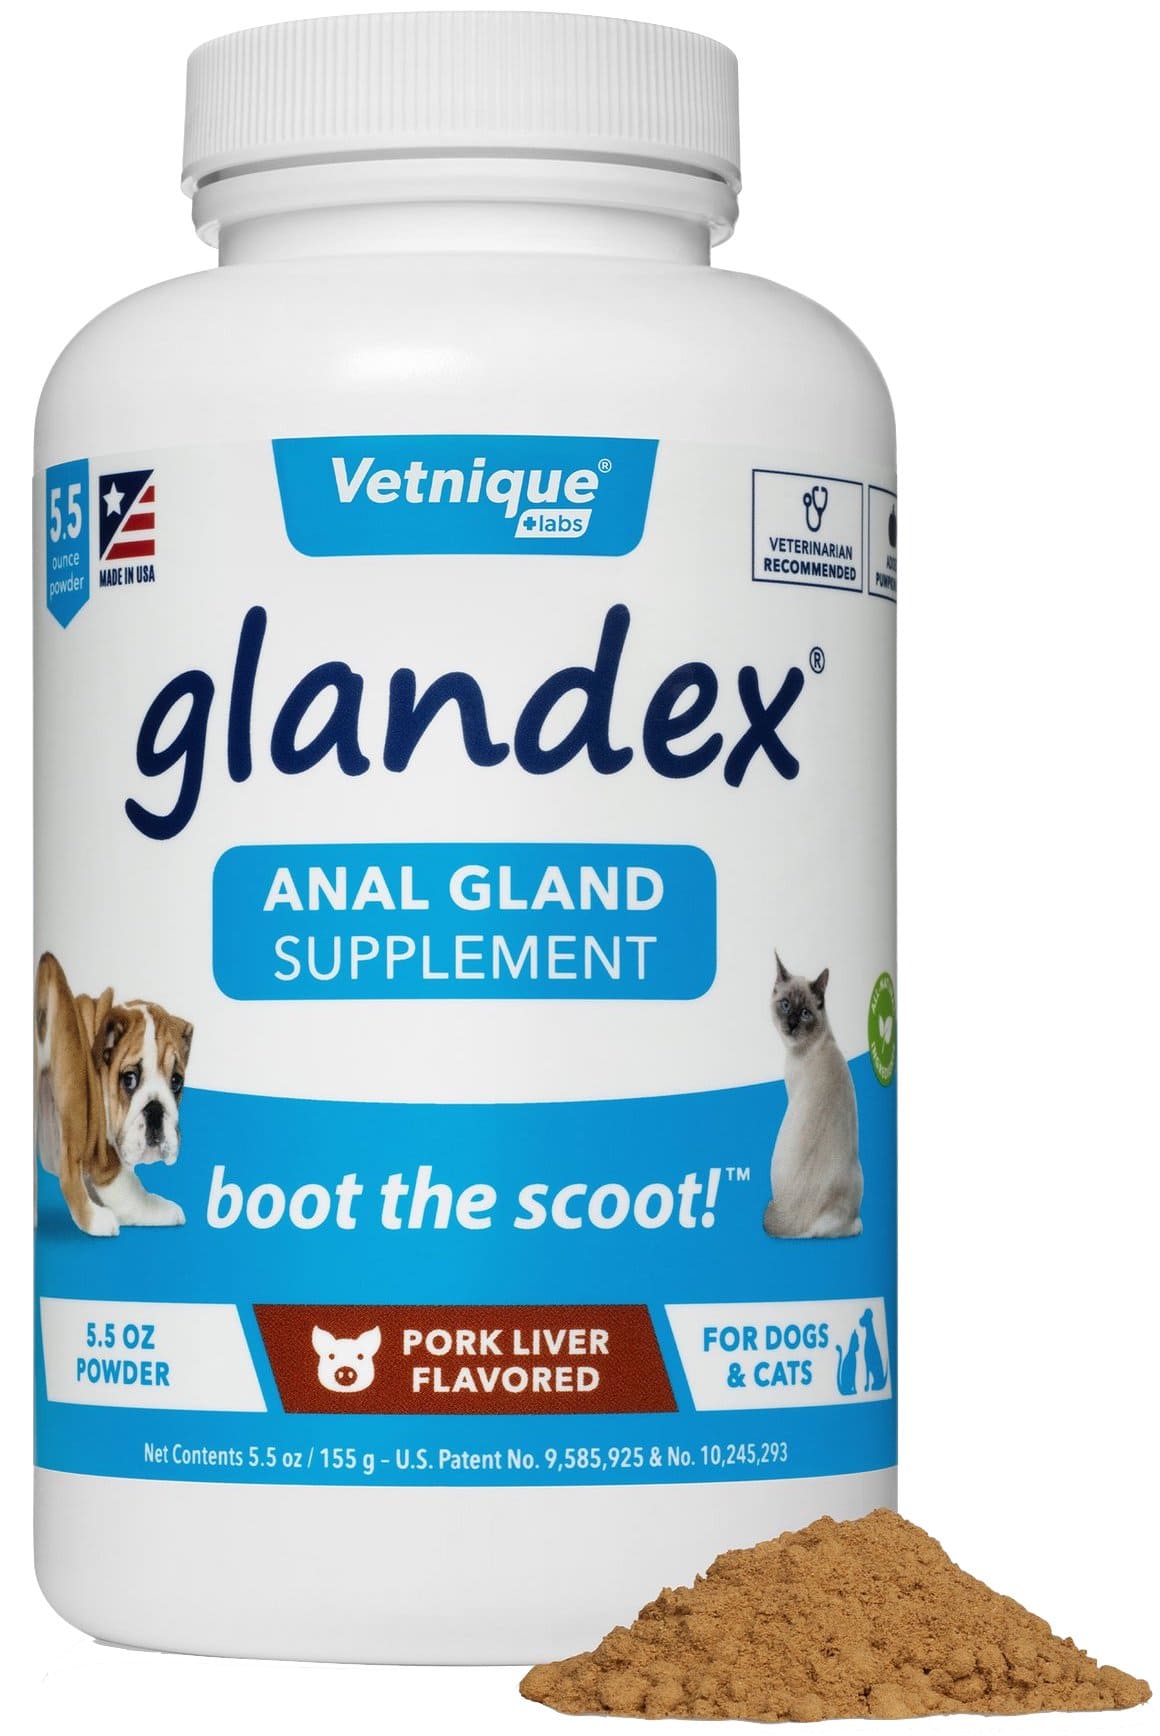 Glandex Anal Gland Supplement Powder 5.5 oz Pork Liver 1